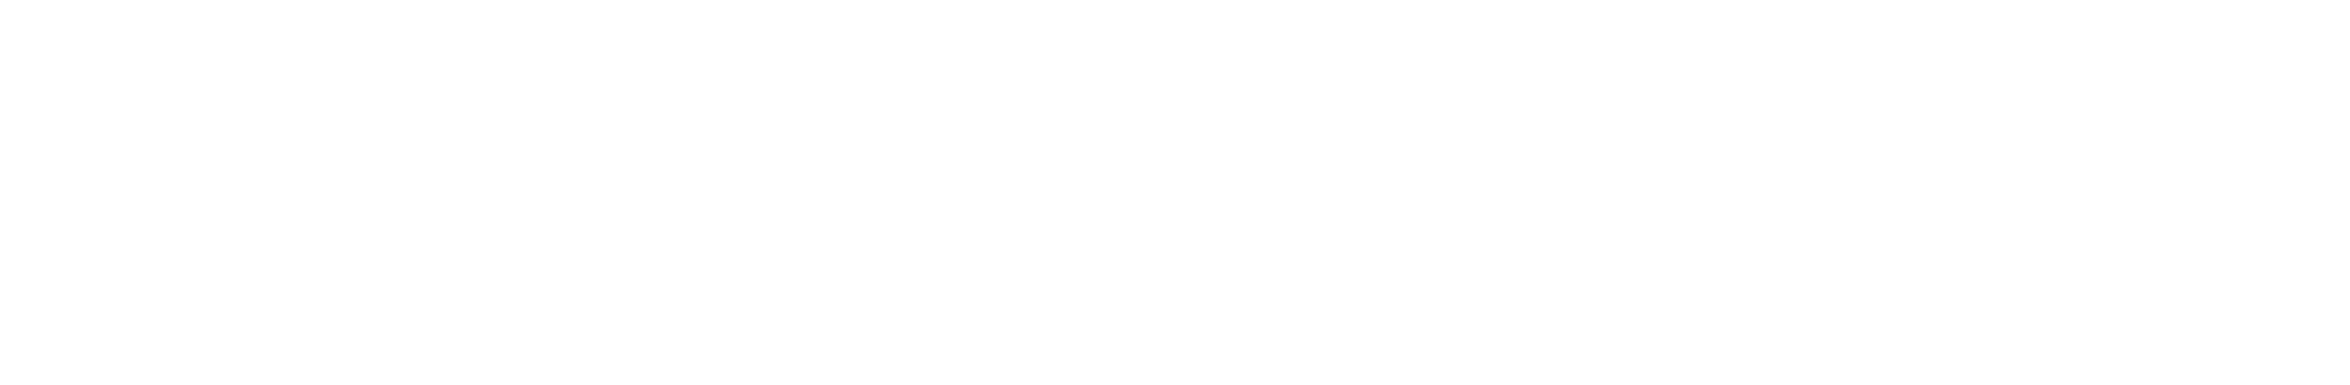 AFCC March 2022 Training